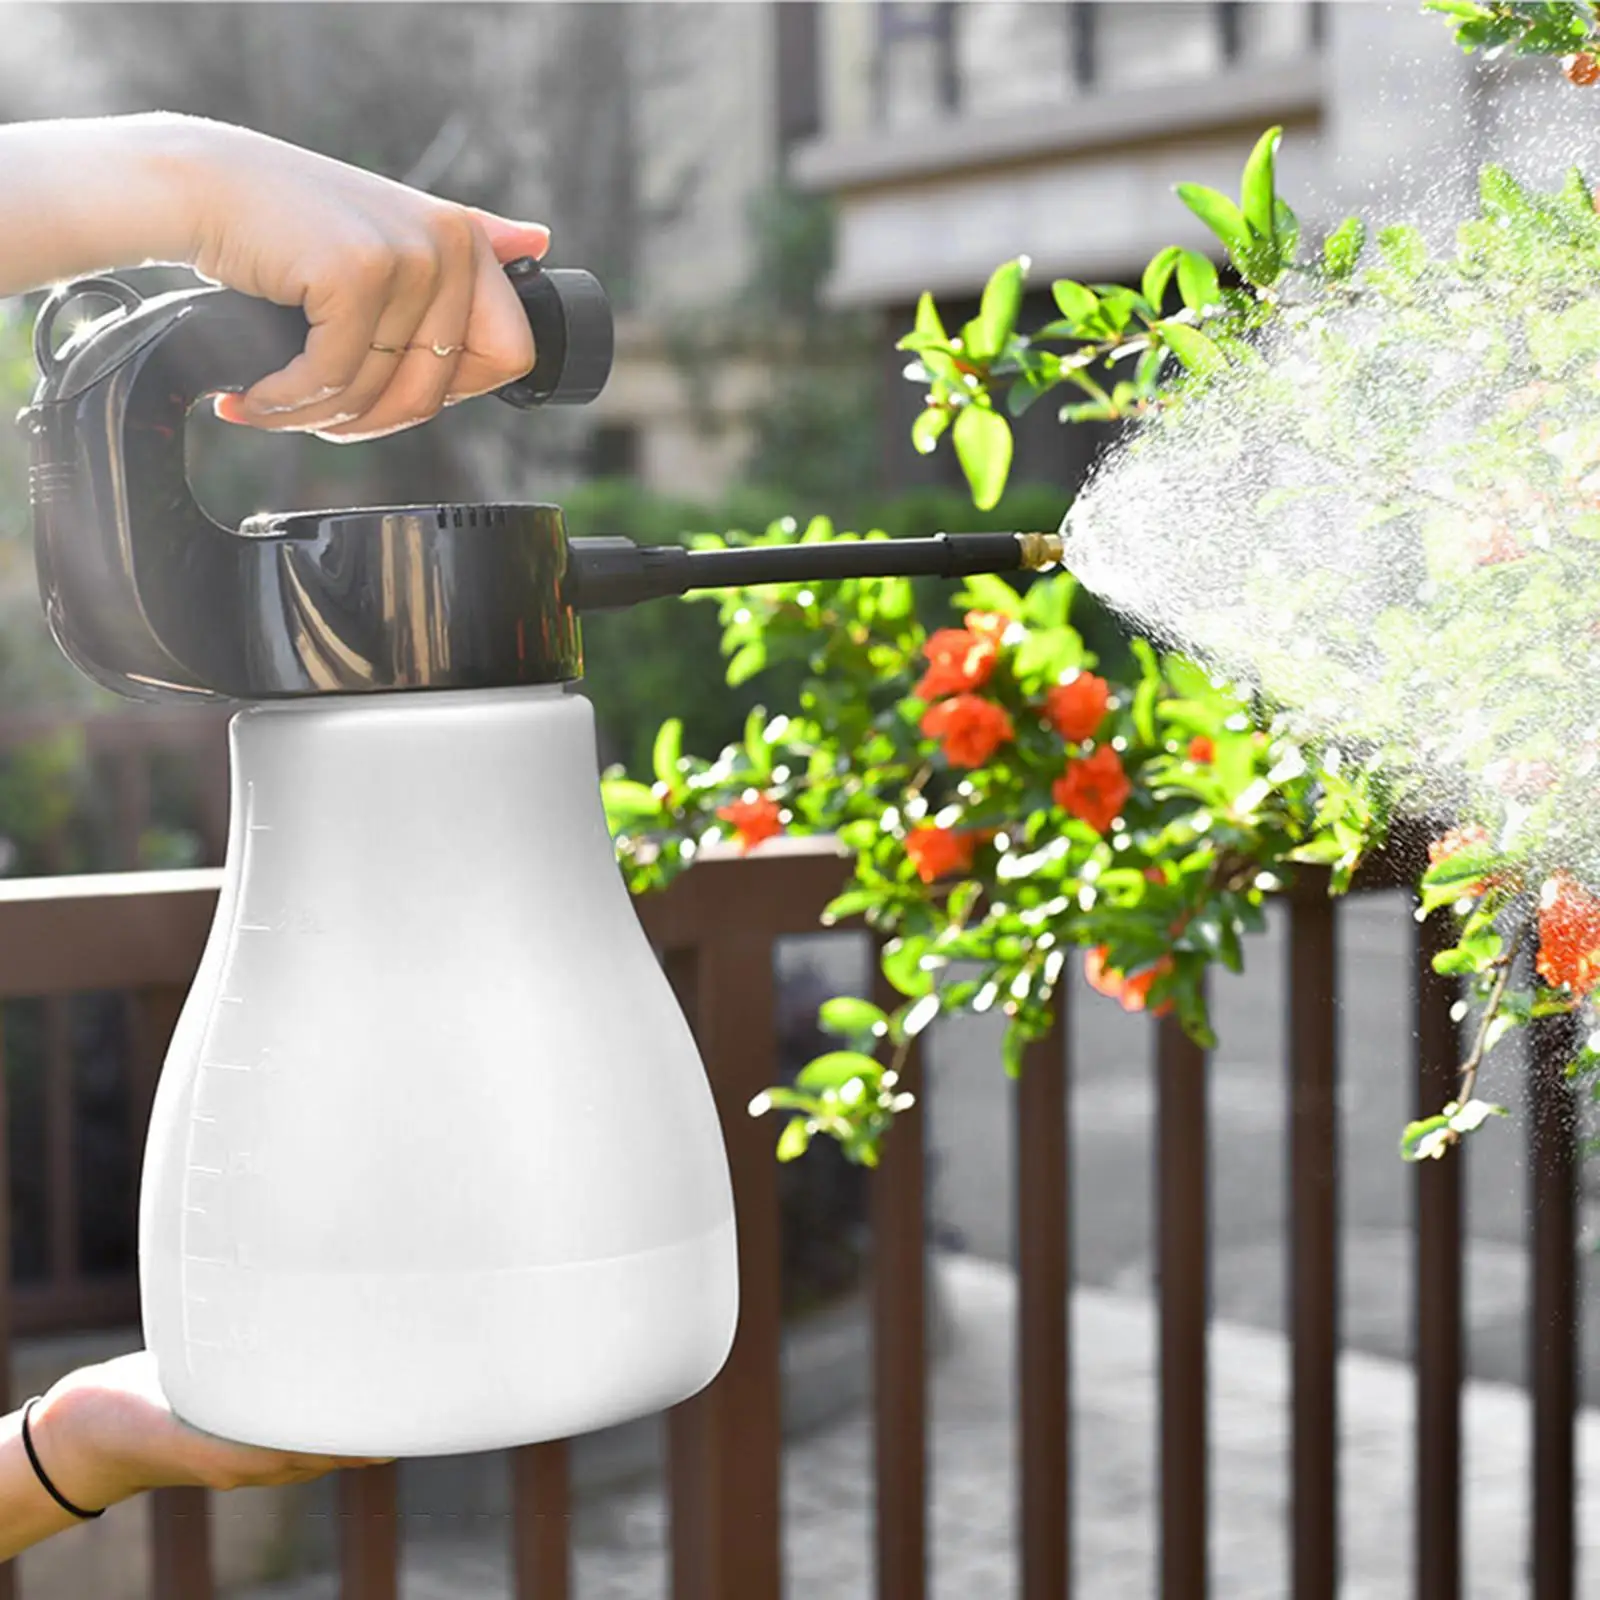 Automatic Electric Planter Sprayer Garden Irrigation Tool Auto Watering Bottle 3L Garden Watering Mist Sprayer for Yard